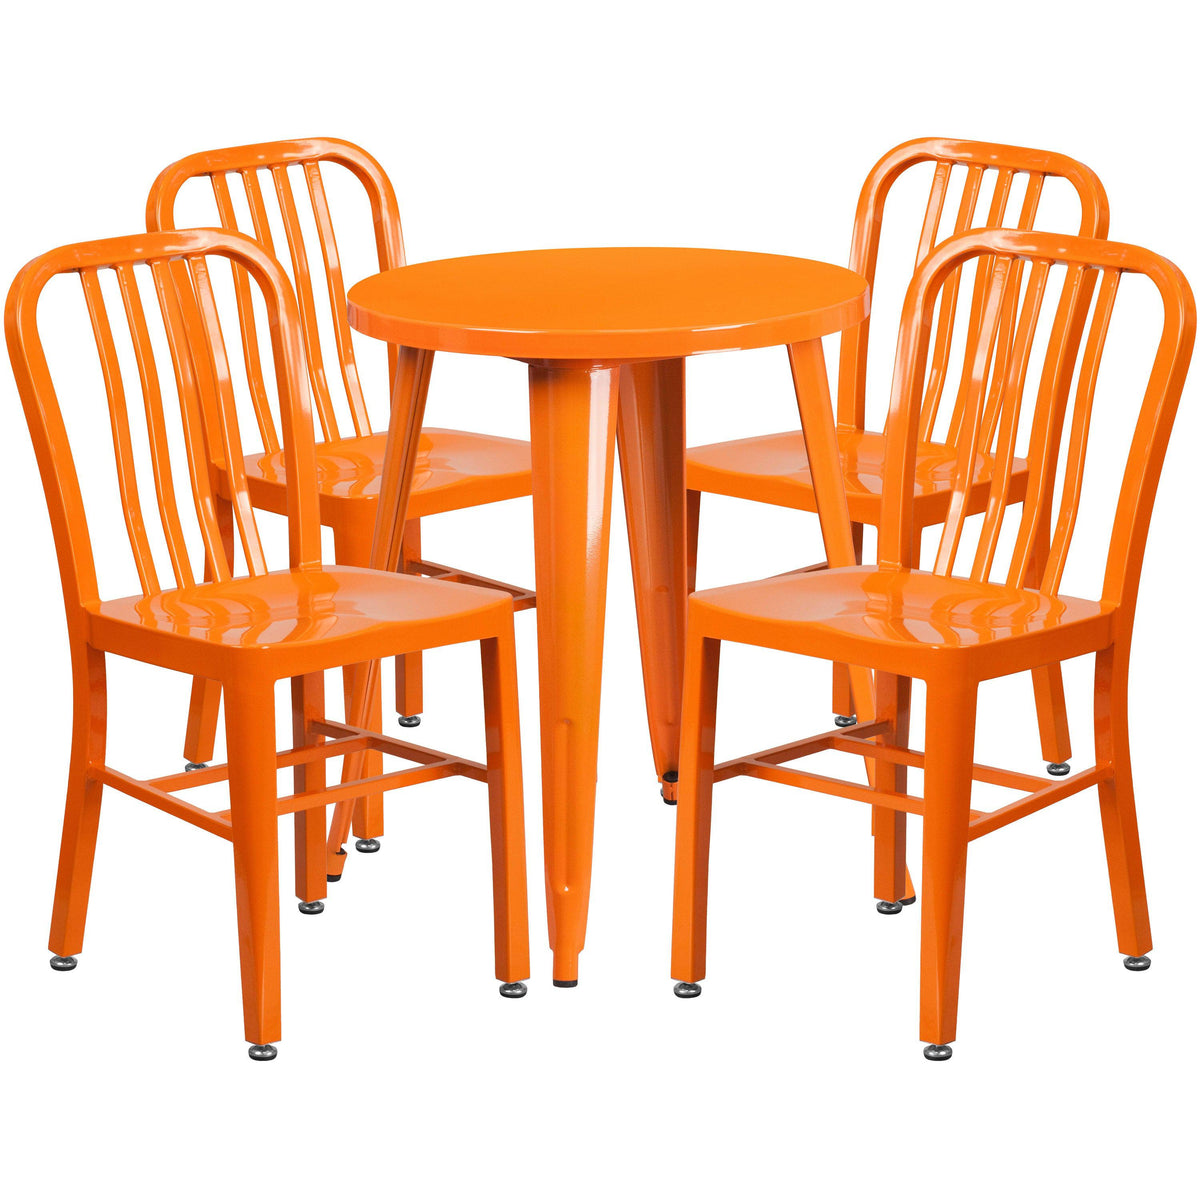 Orange |#| 24inch Round Orange Metal Indoor-Outdoor Table Set w/4 Vertical Slat Back Chairs